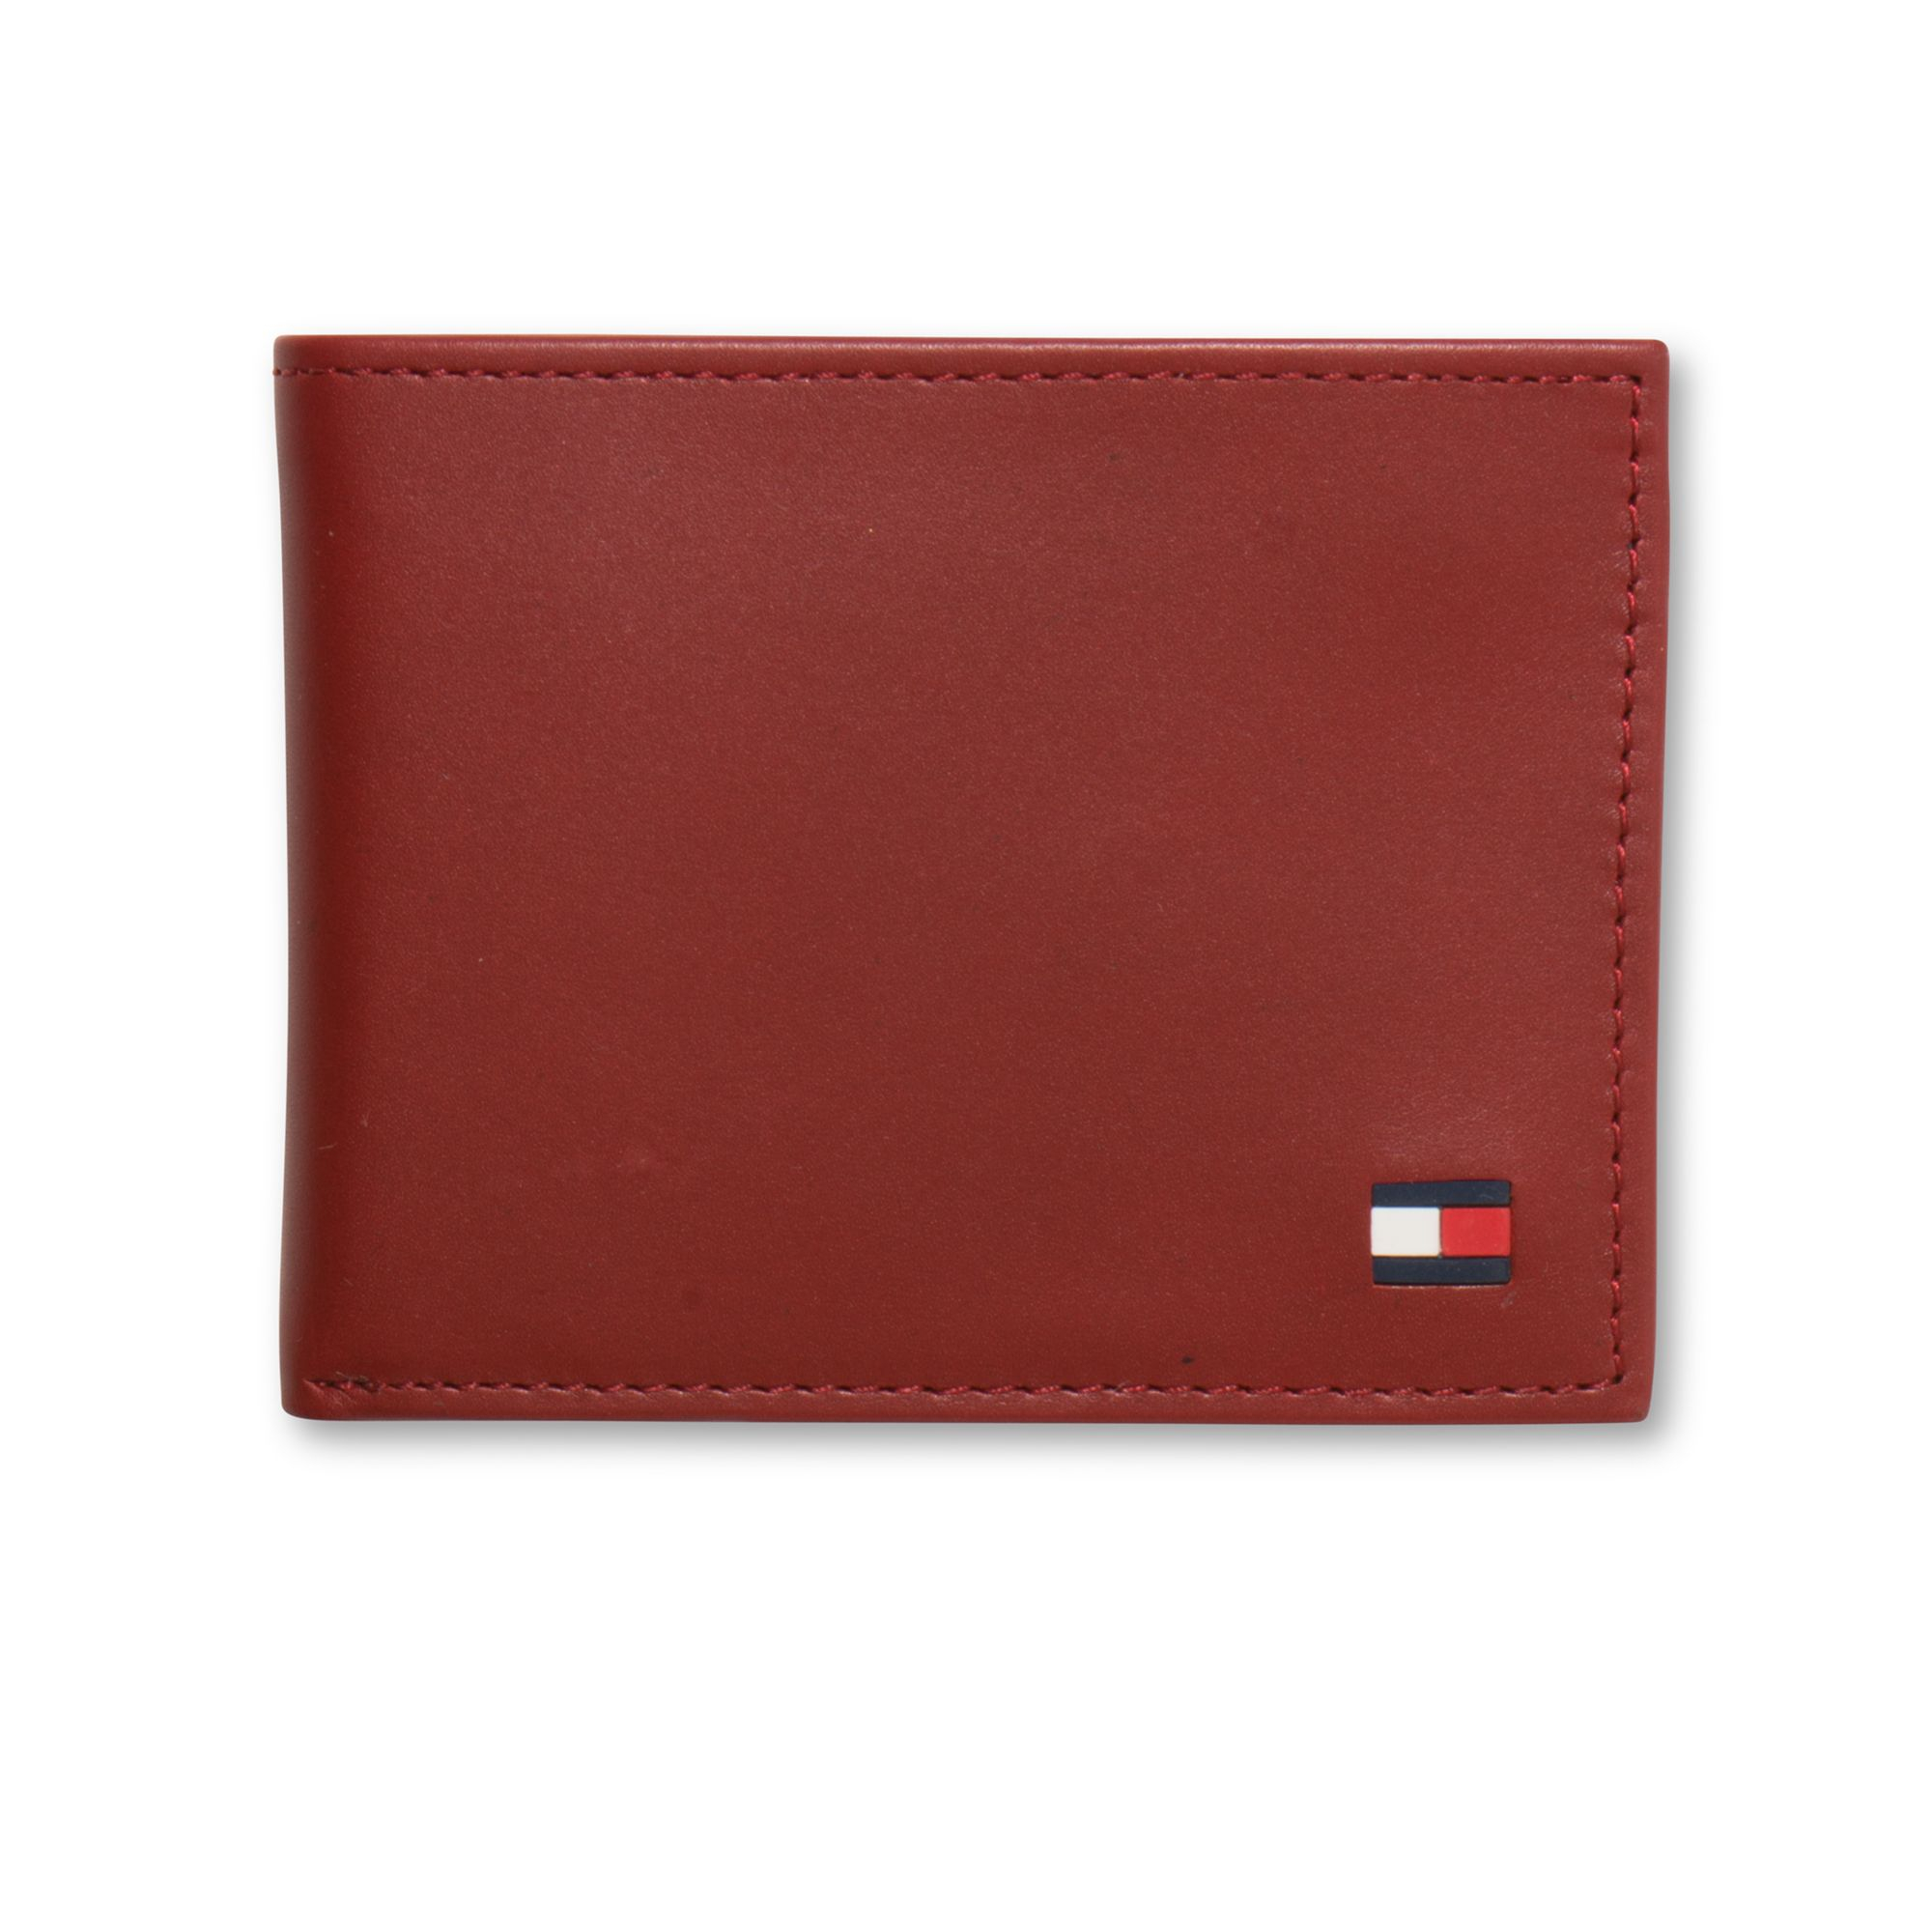 Tommy Hilfiger Dore Passcase Billfold Wallet in Red for Men - Lyst